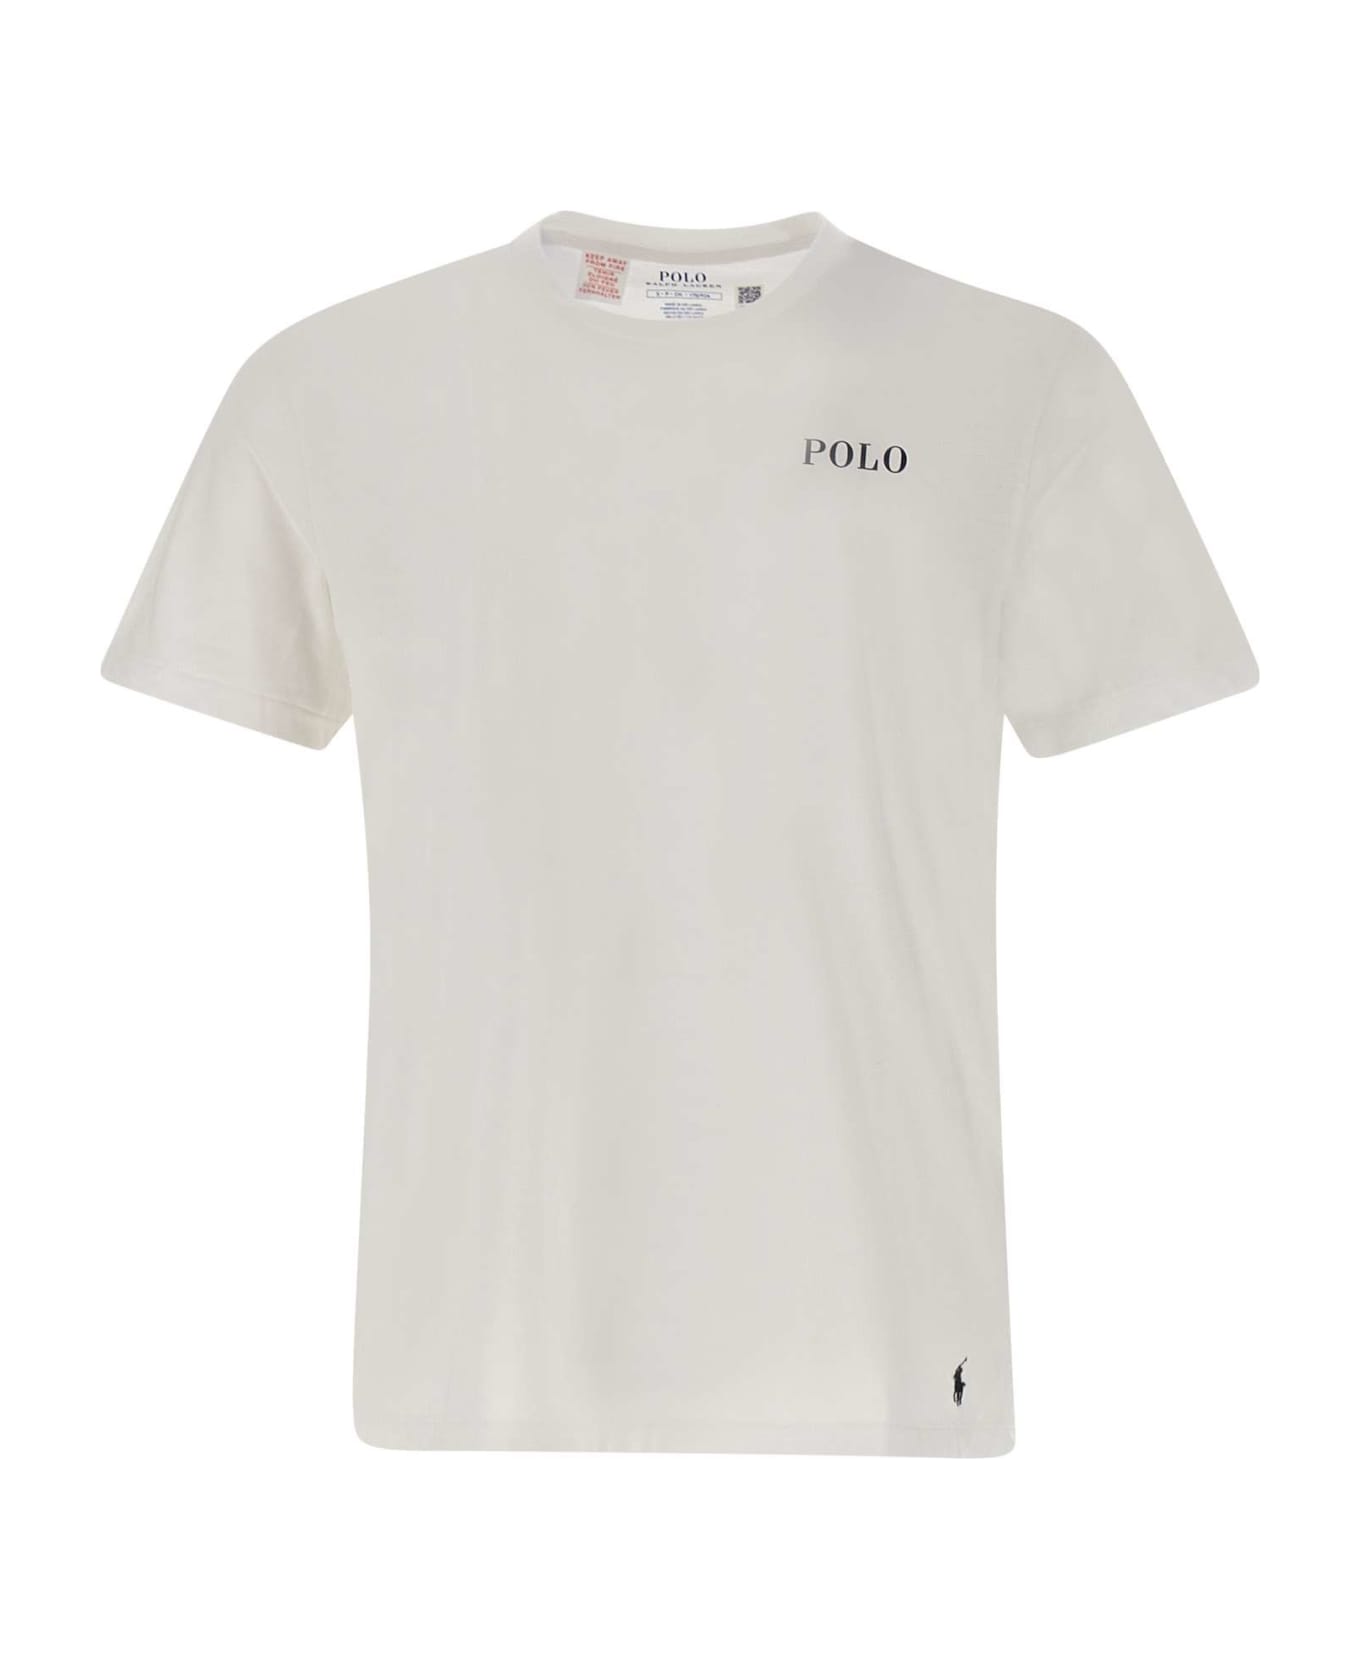 Polo Ralph Lauren "msw" Cotton T-shirt - WHITE シャツ